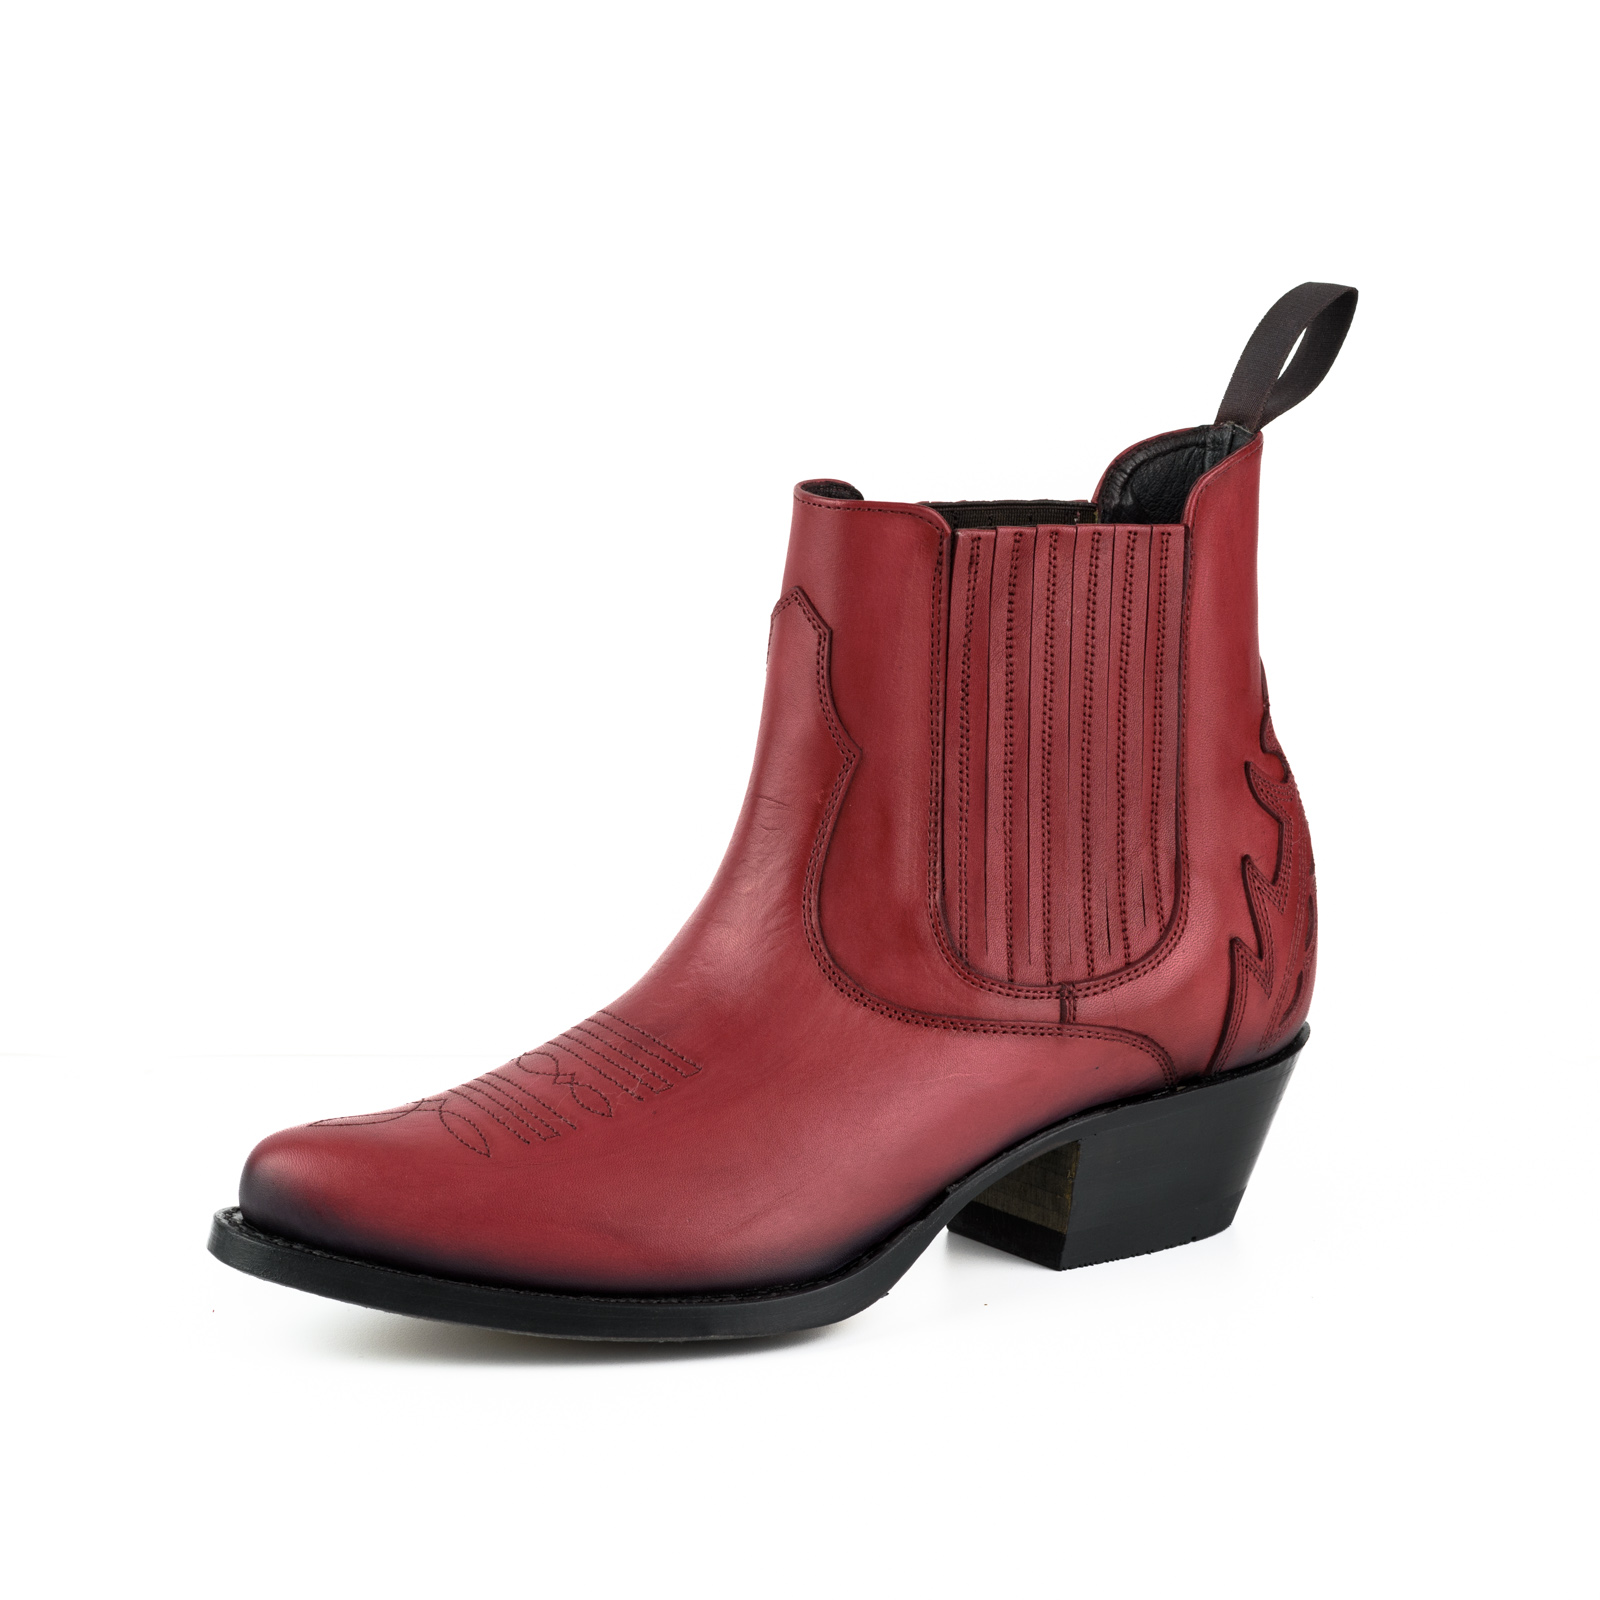 mayura-boots-modelo-marilyn-2487-rojo-15-18c-1